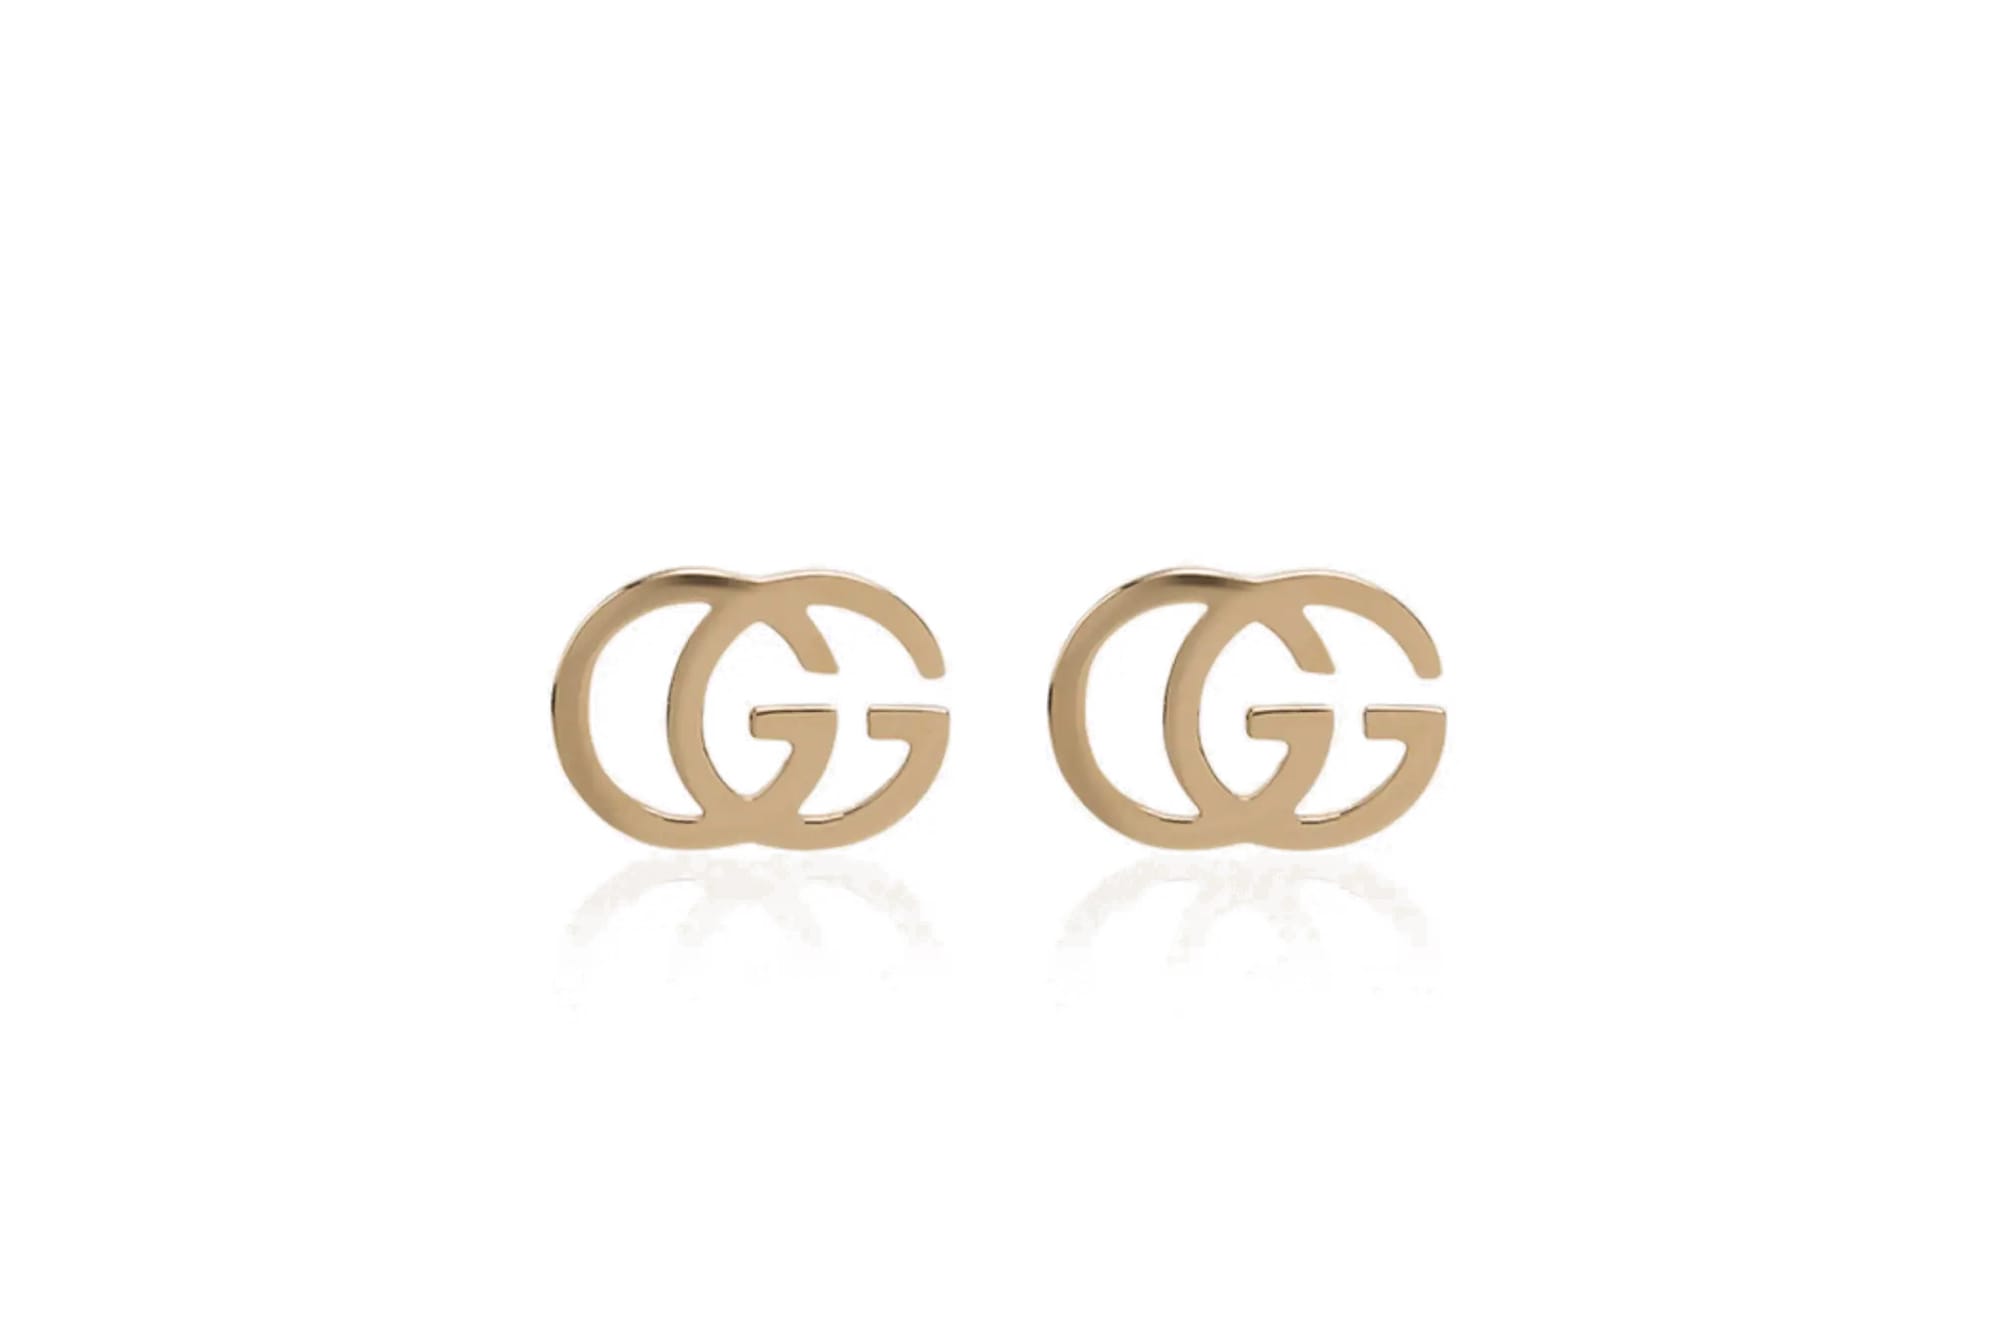 gucci gold logo